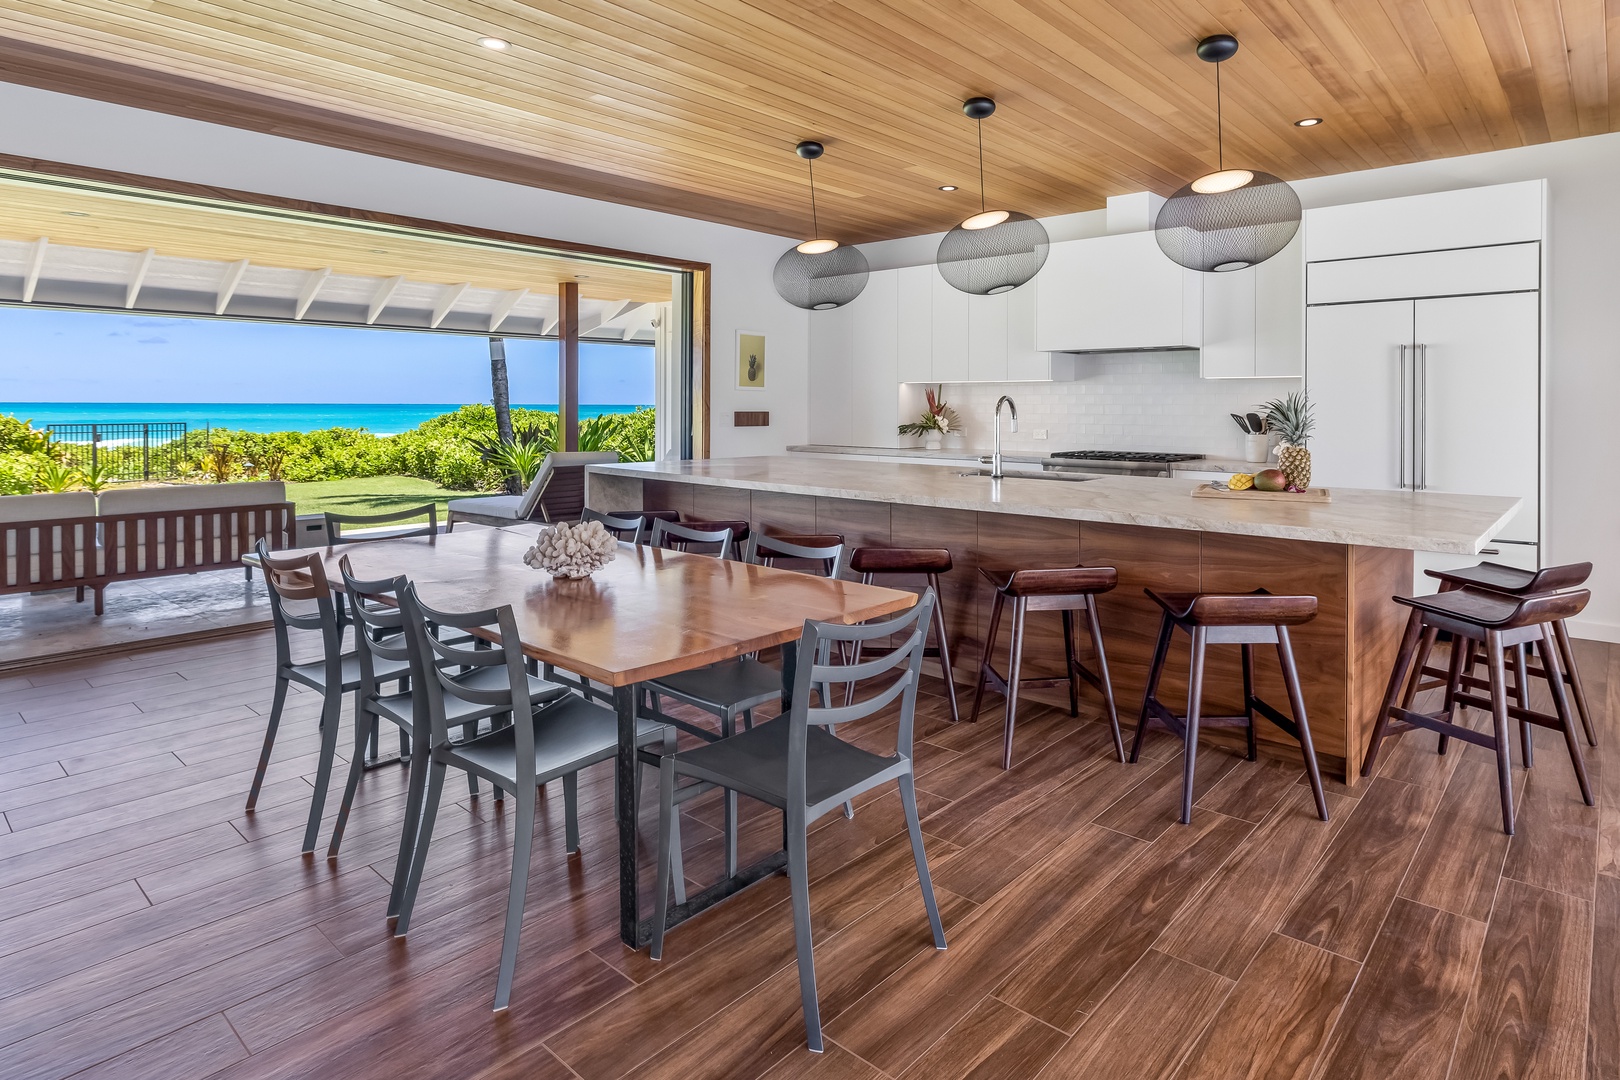 Kailua Vacation Rentals, Kailua Beach Villa - Breakfast bar seating in the open, modern kitchen.